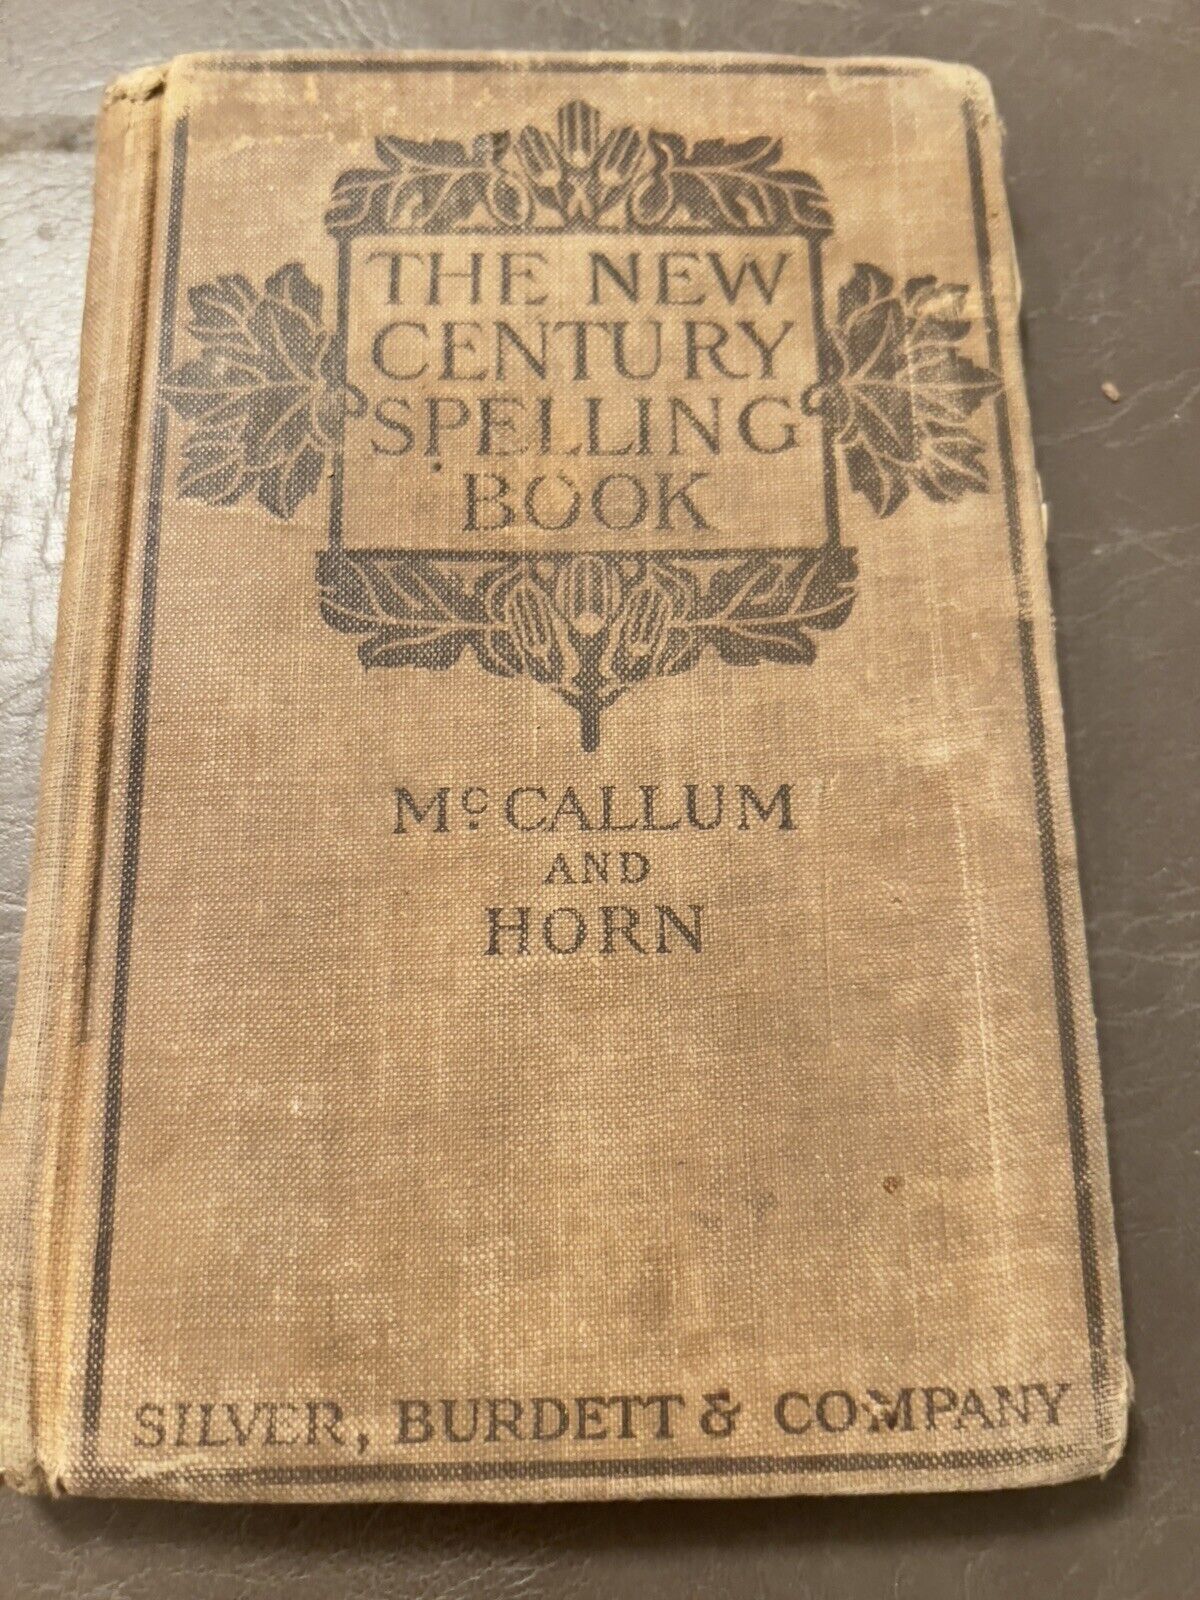  1912 The New Century Spelling Book.